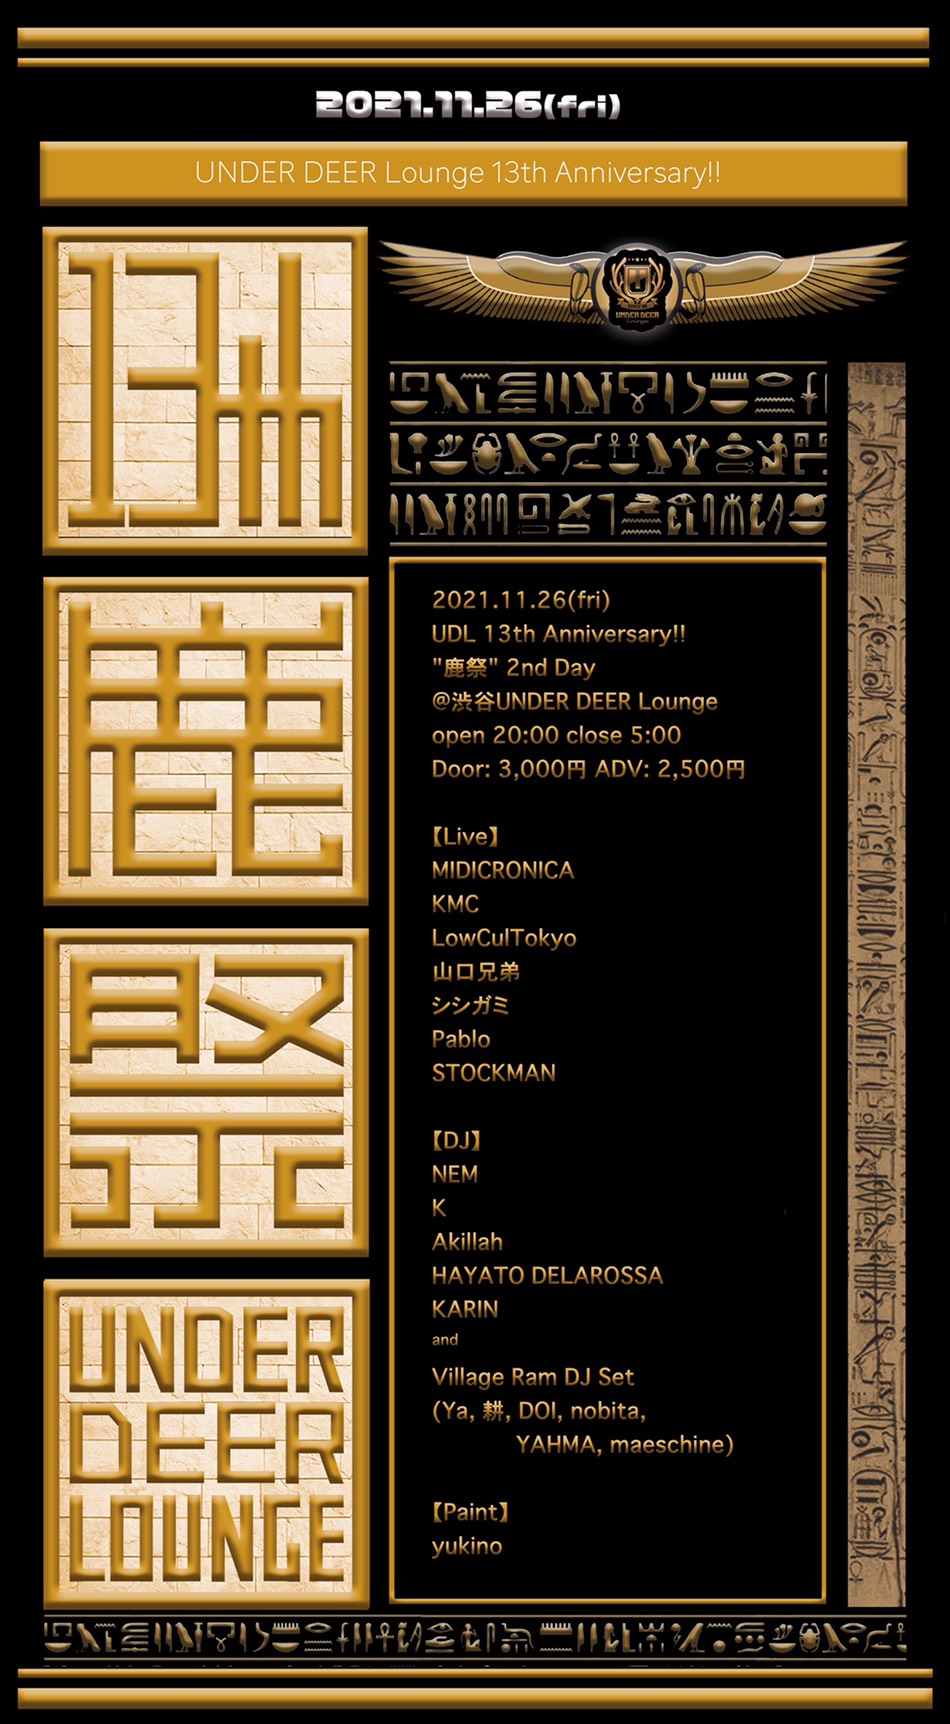 2021.11.26(fri) UDL 13th Anniversary!! “鹿祭” 2nd Day @渋谷UNDER DEER Lounge